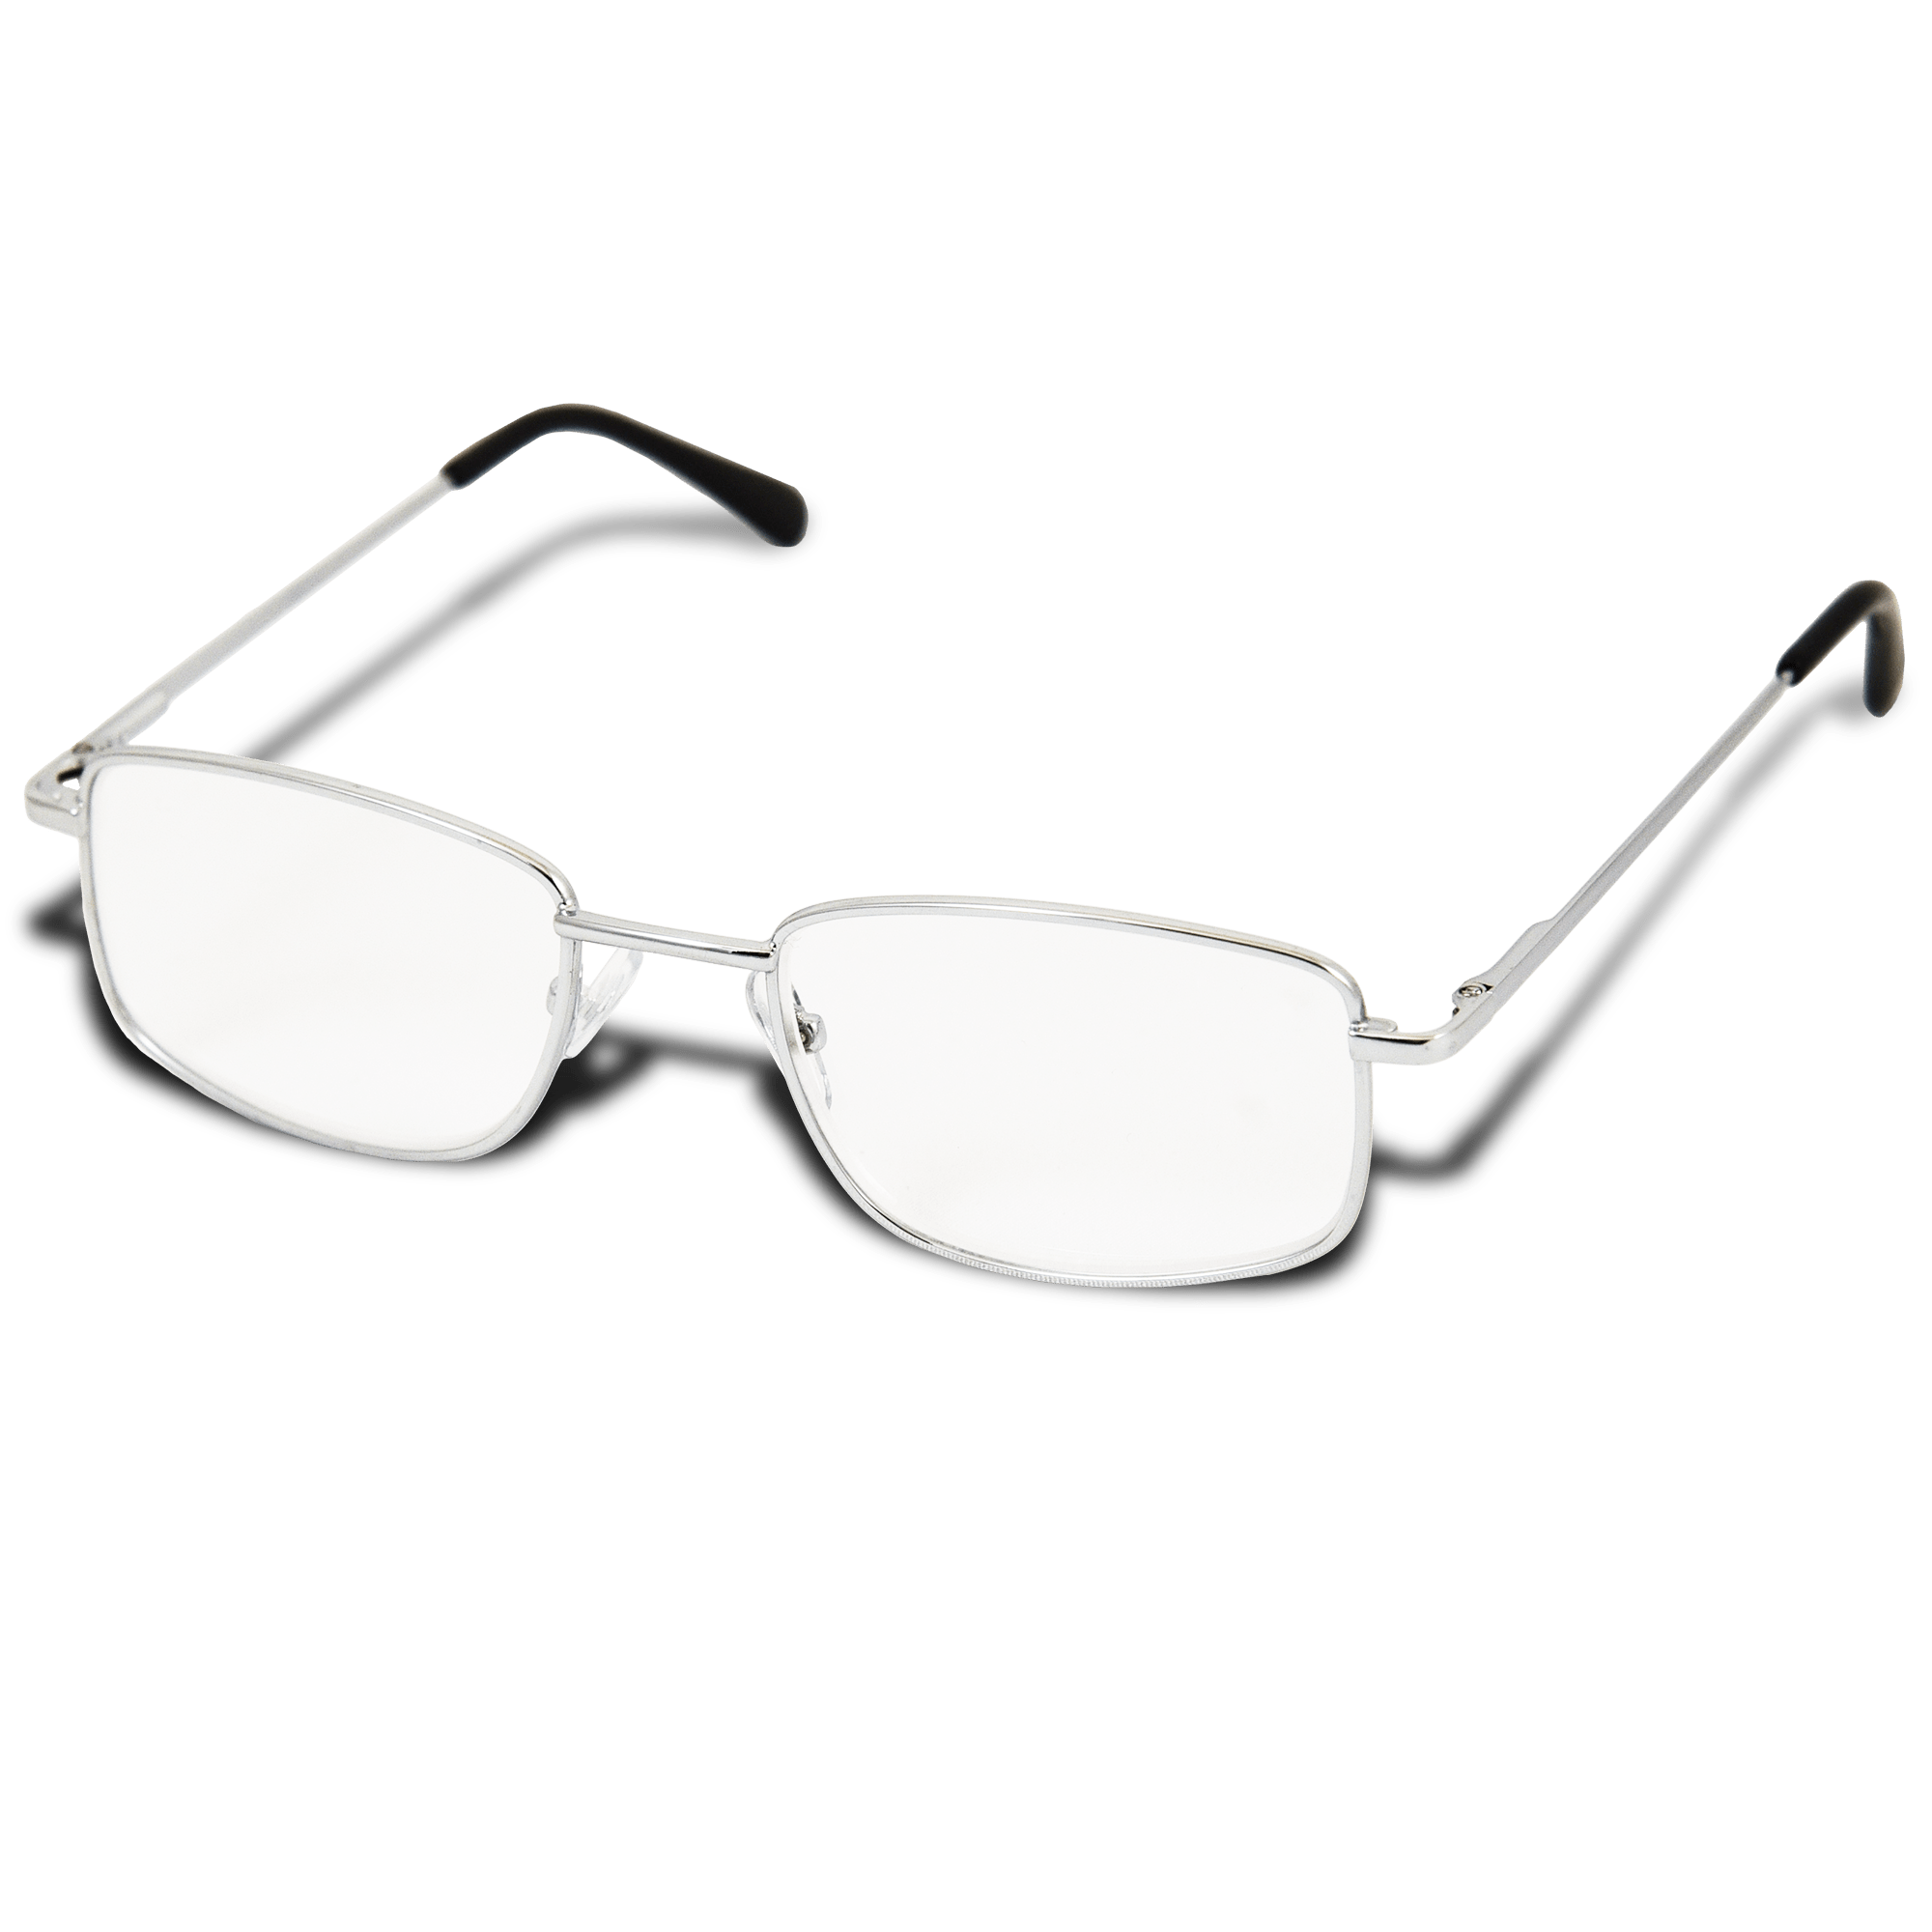 Good-Lite Hyperopia Glasses